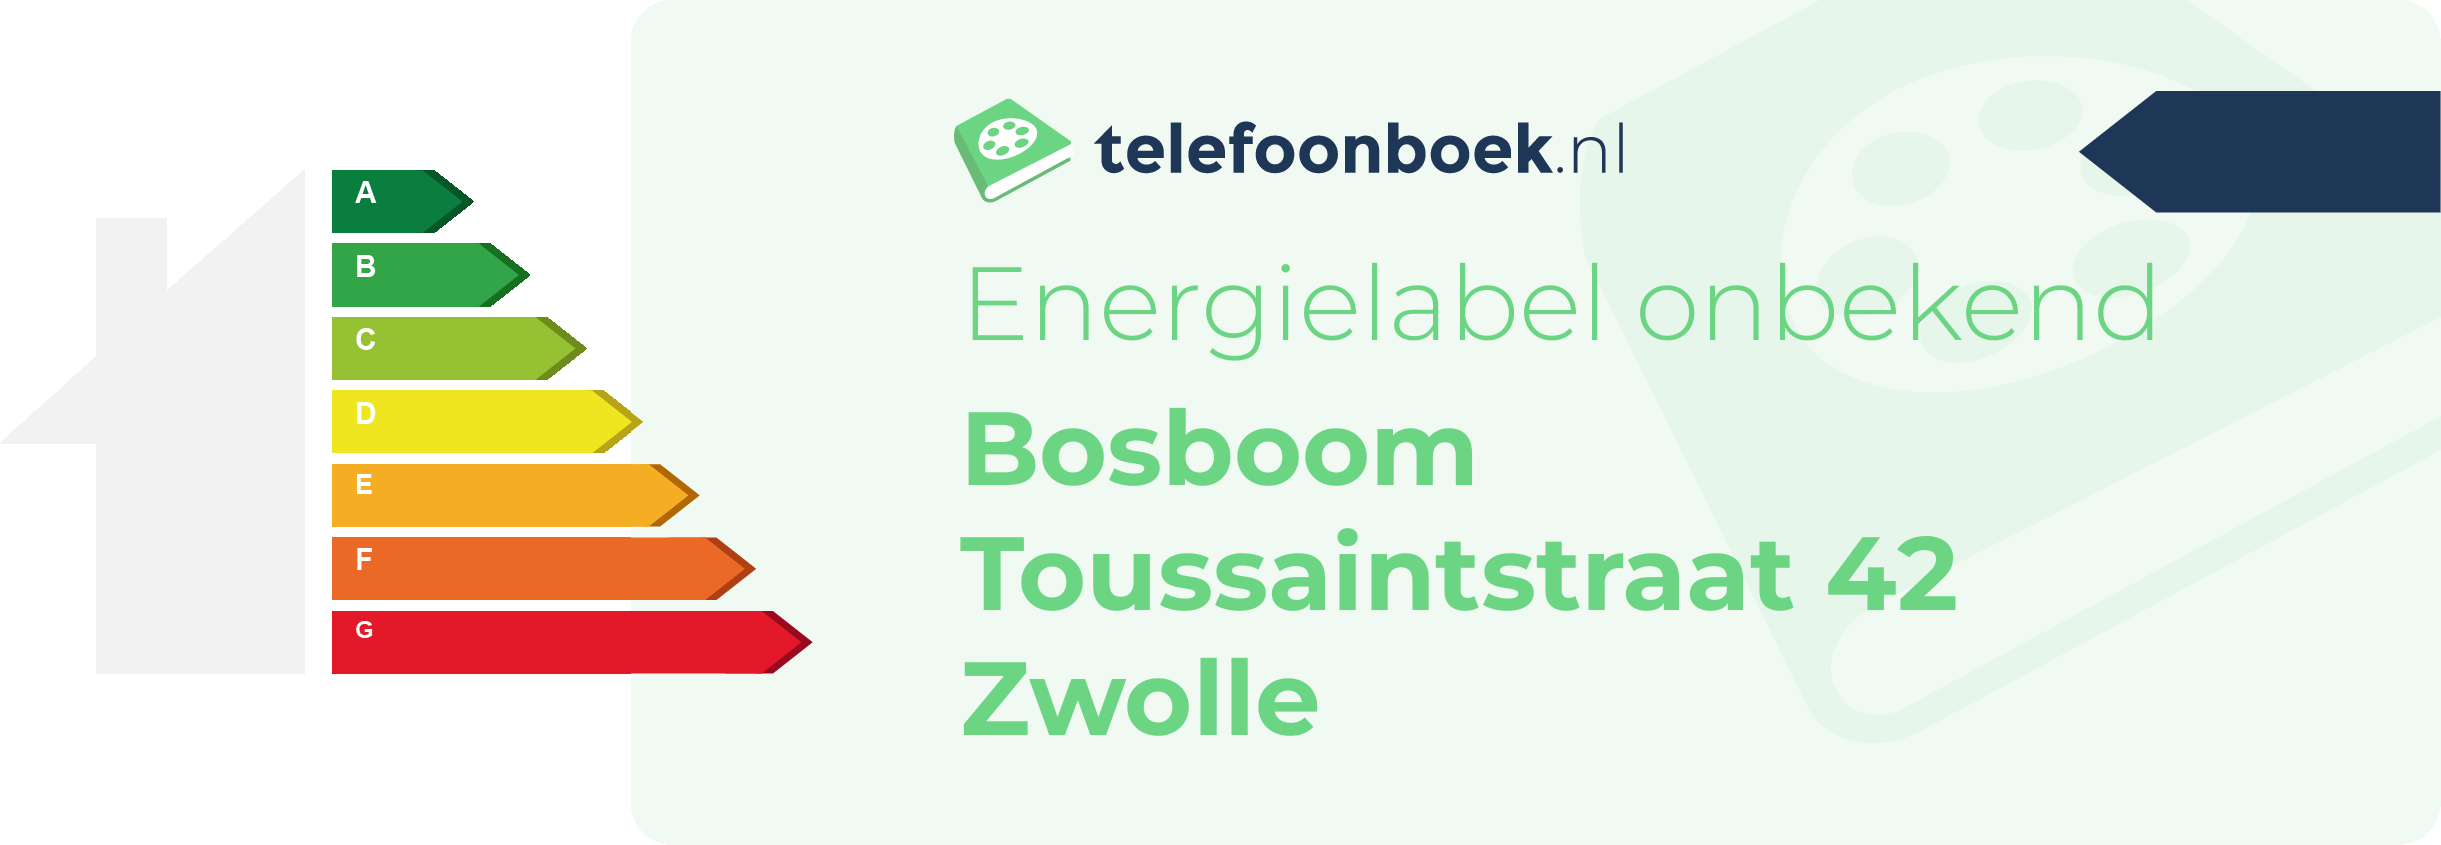 Energielabel Bosboom Toussaintstraat 42 Zwolle